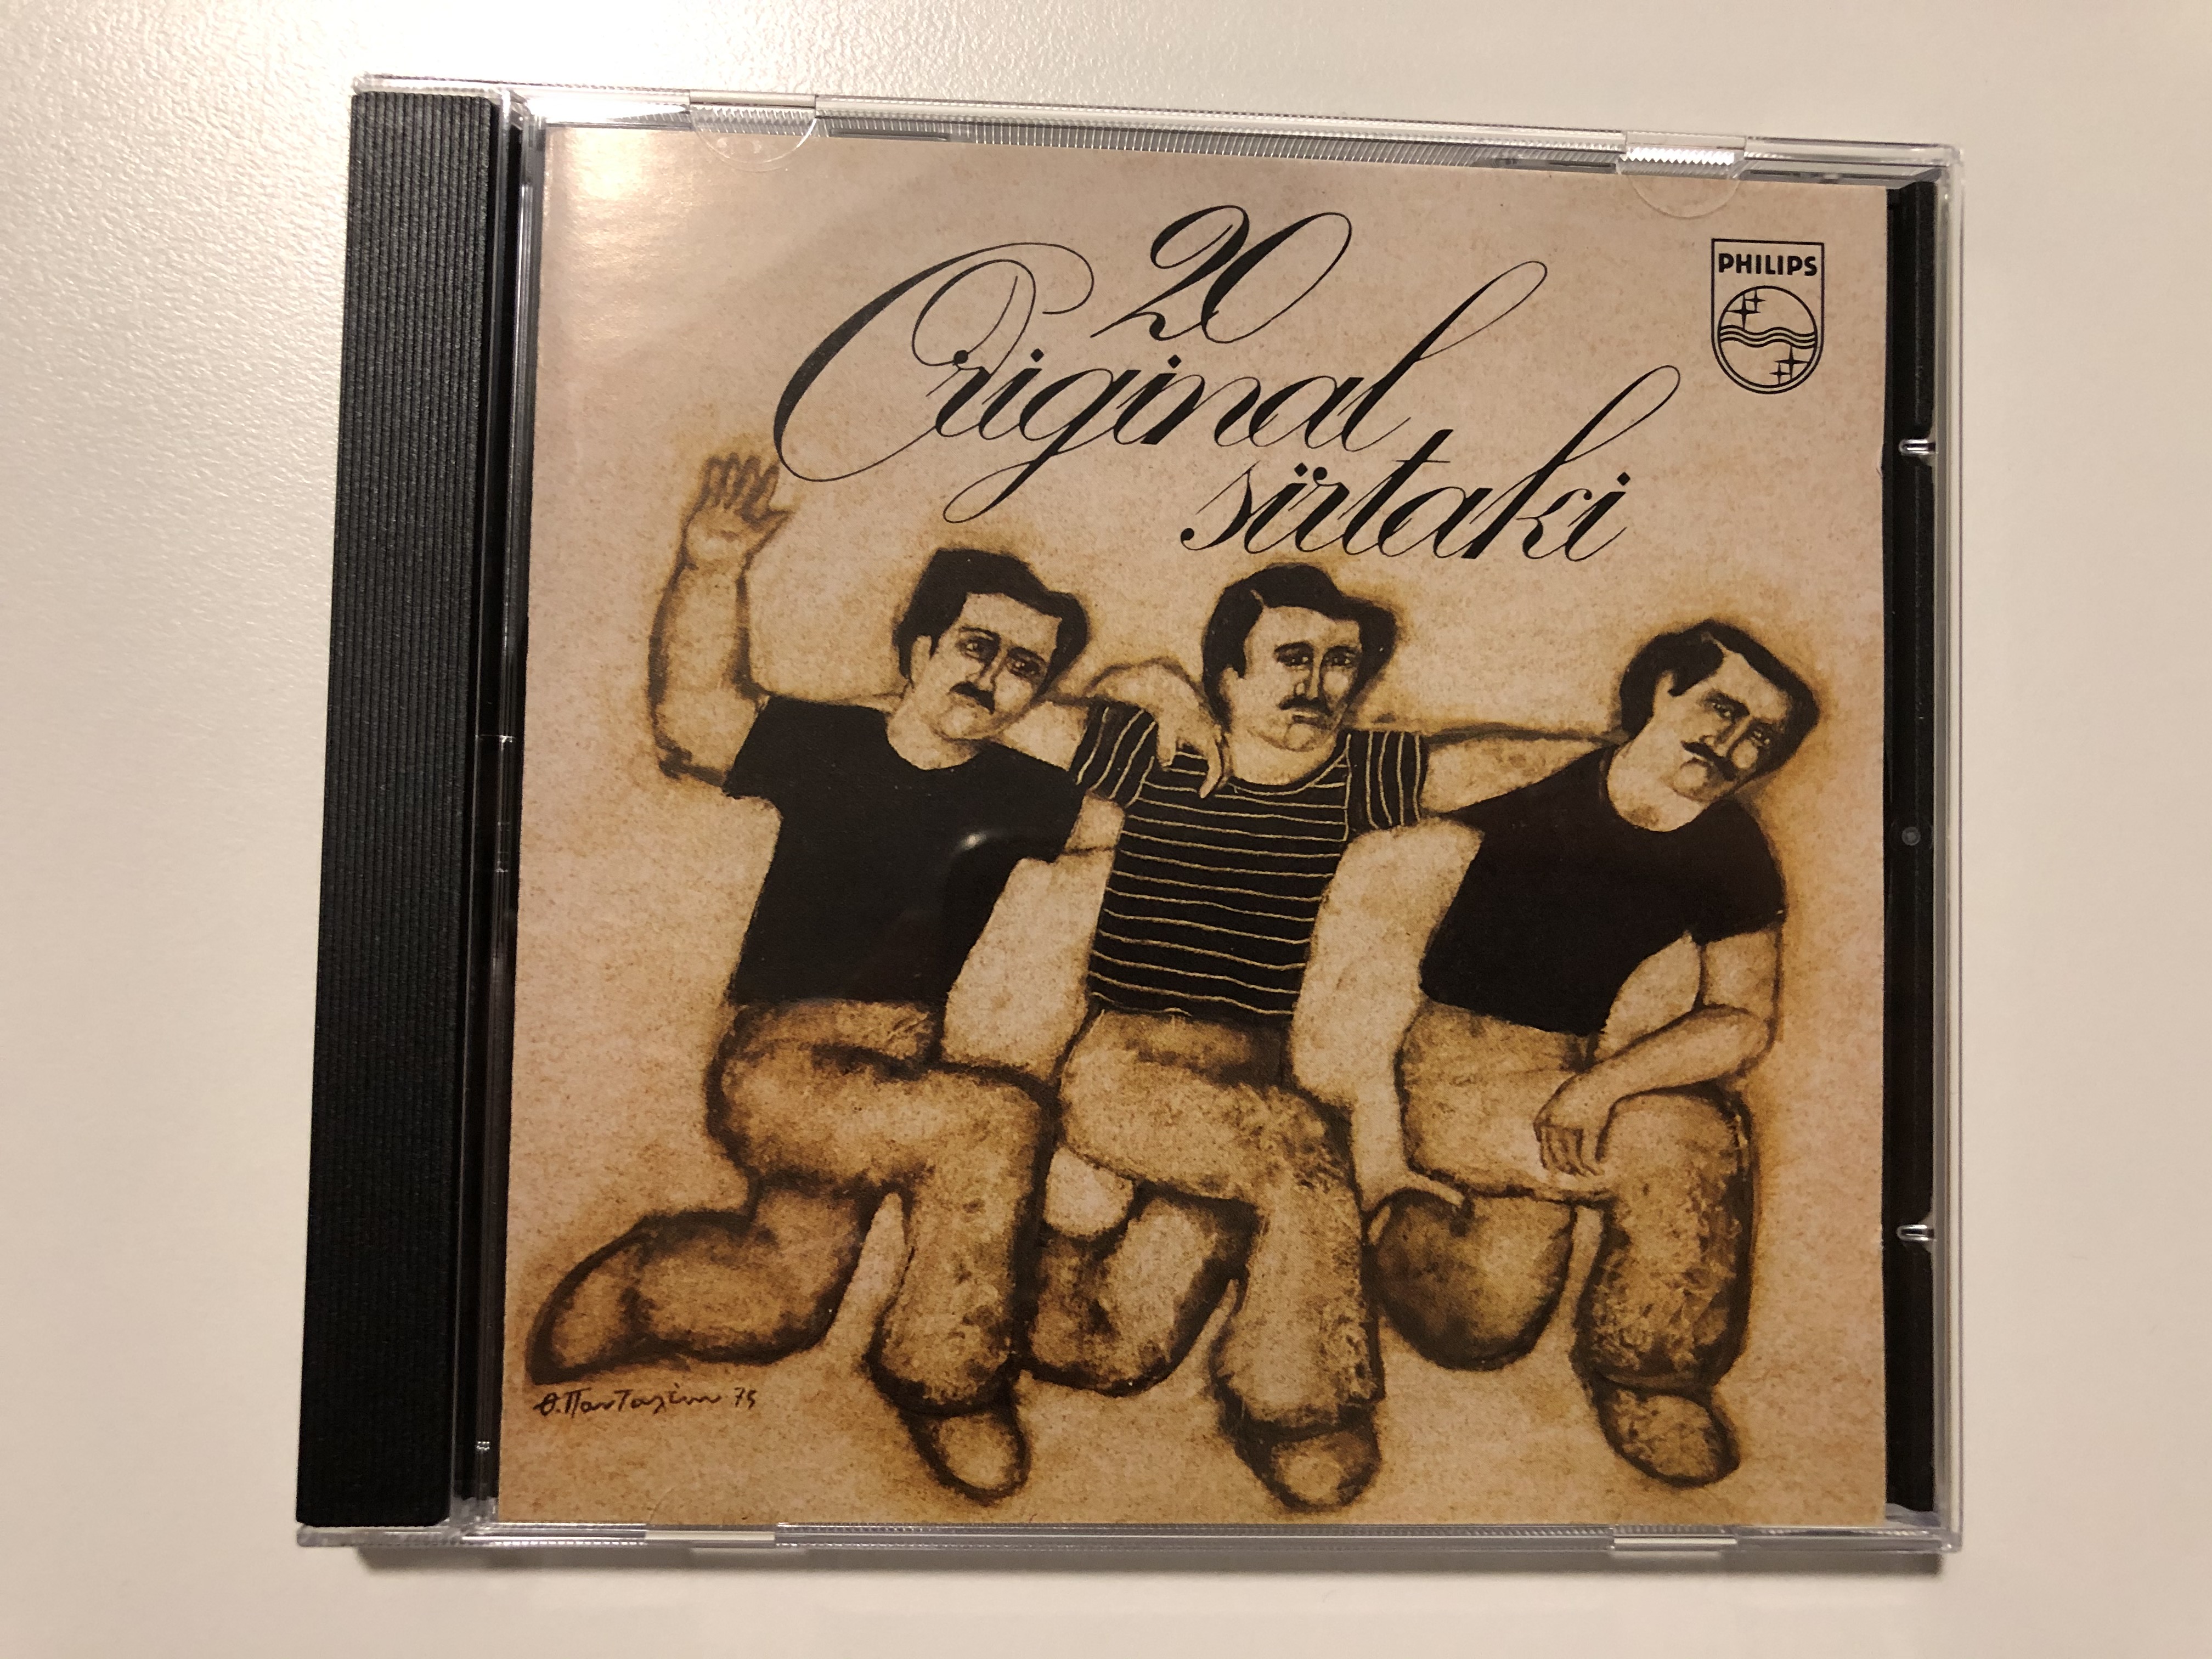 20-original-sirtaki-philips-audio-cd-1990-842-730-2-1-.jpg